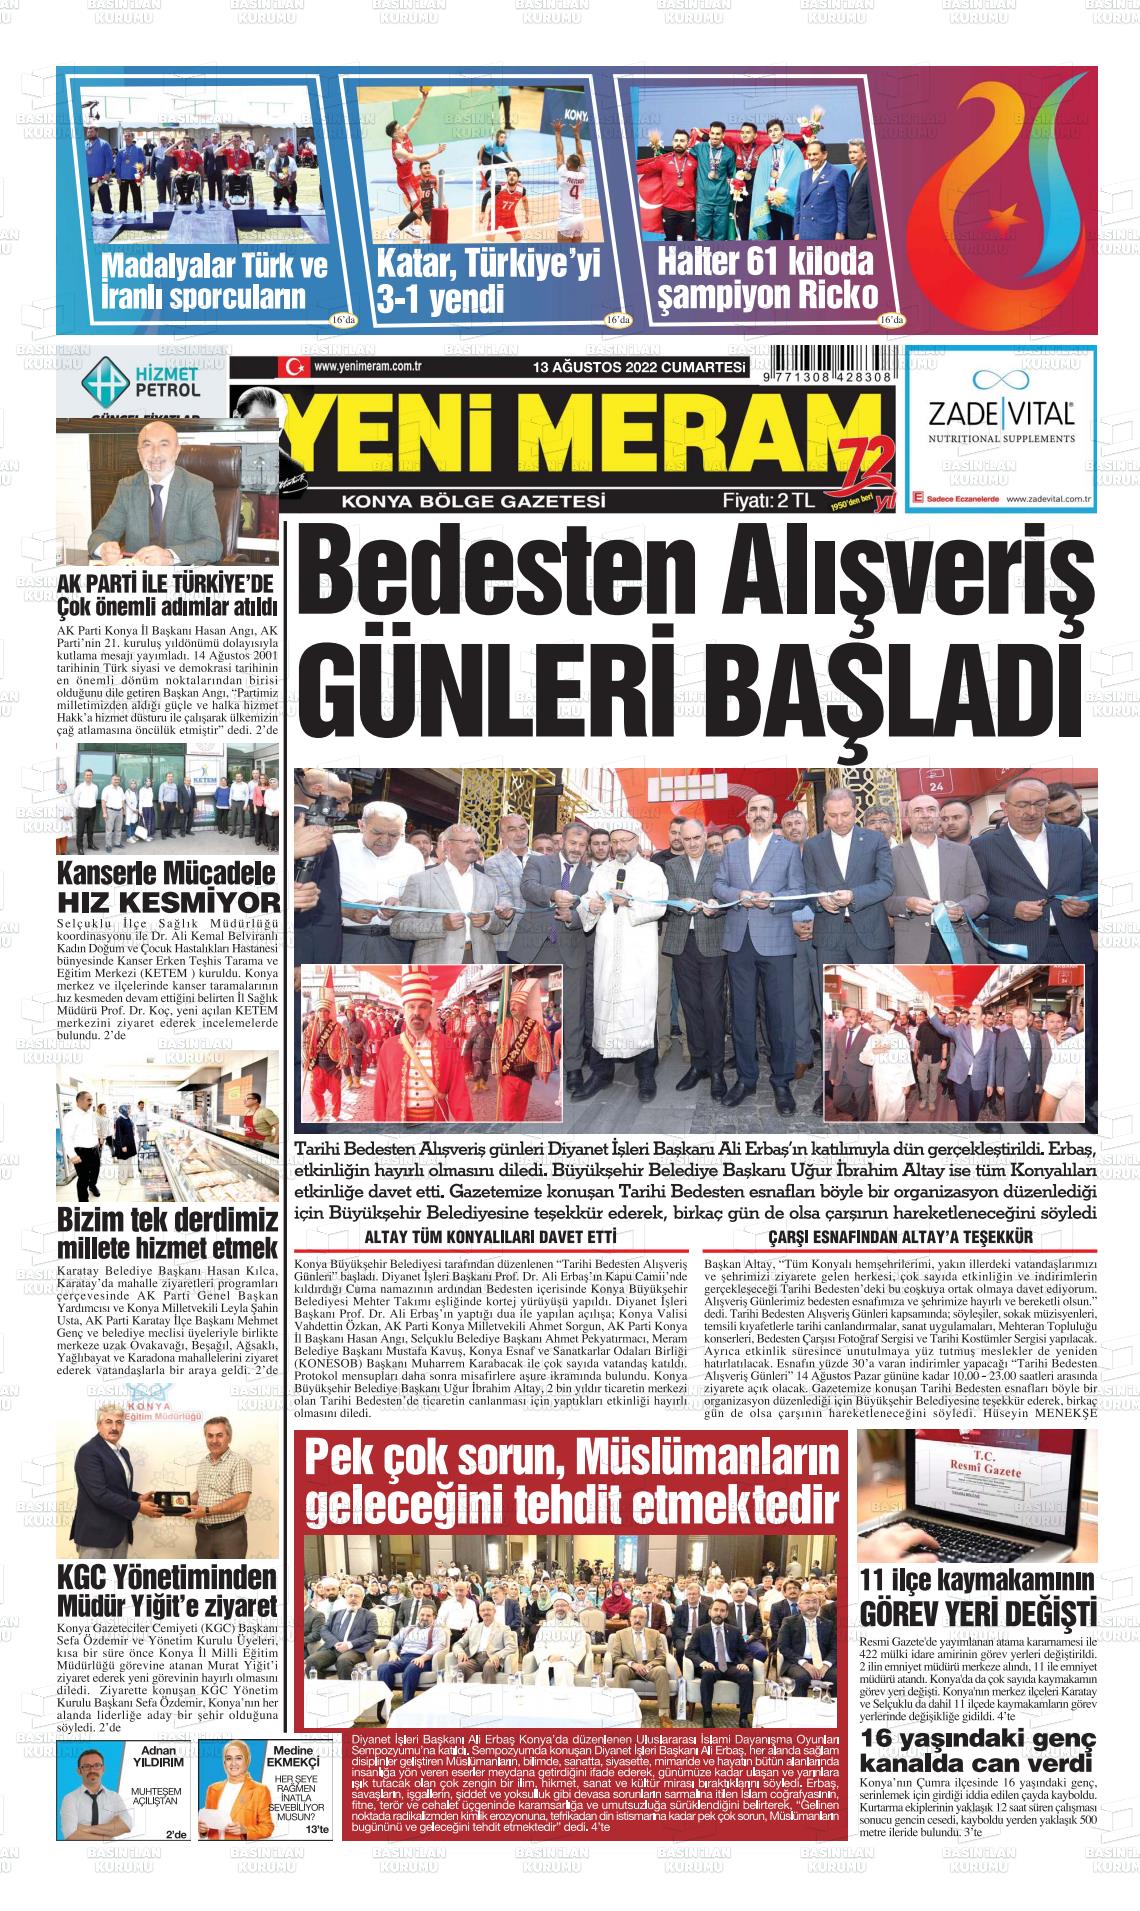 13 Ağustos 2022 Yeni Meram Gazete Manşeti